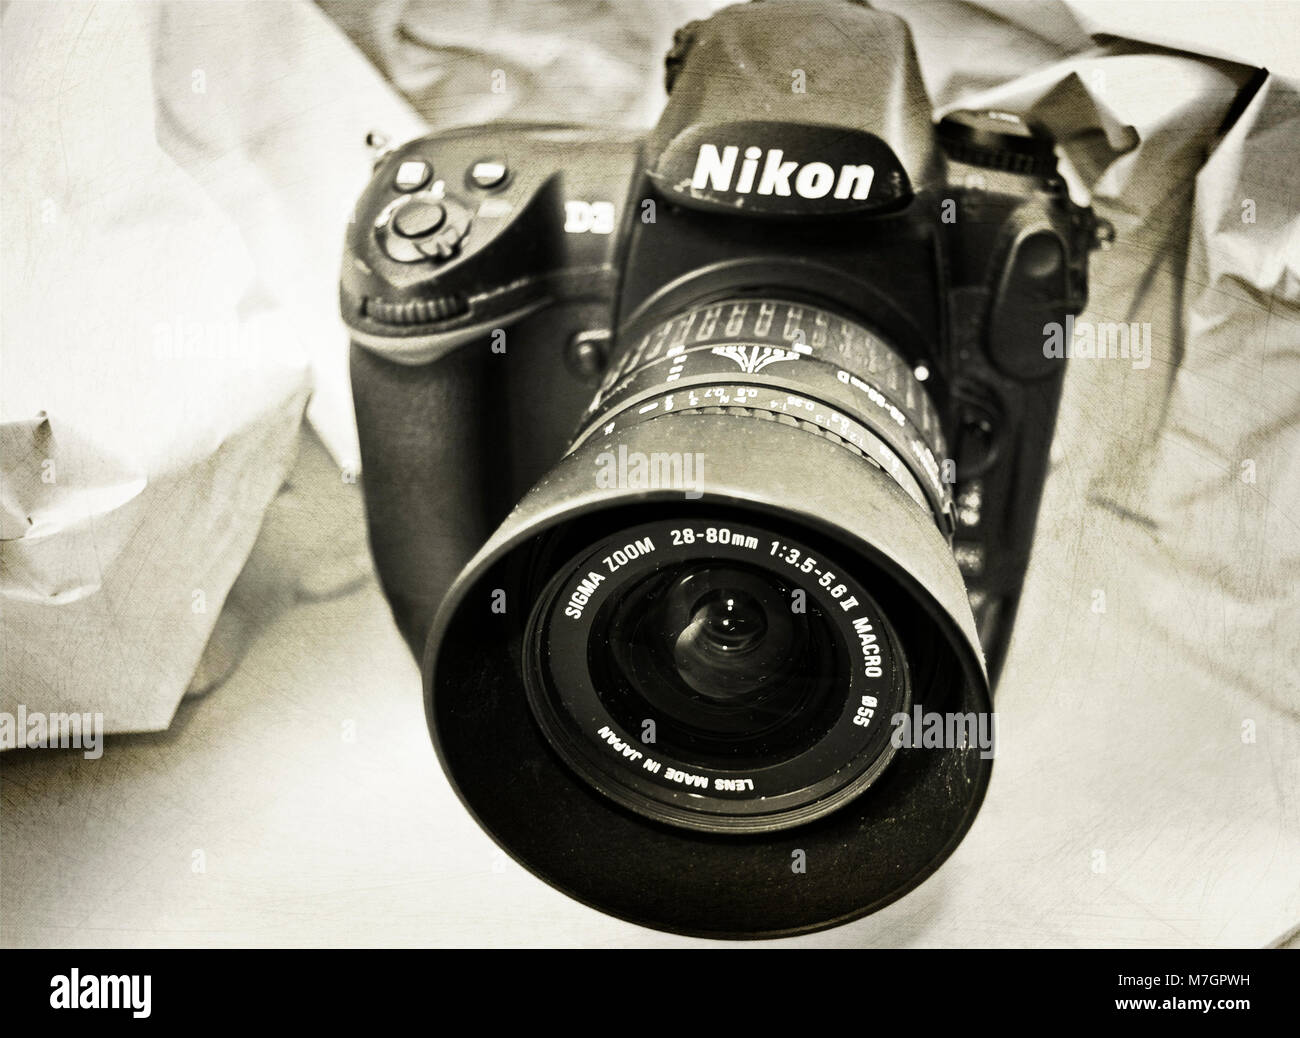 Nikon Gearporn Stock Photo